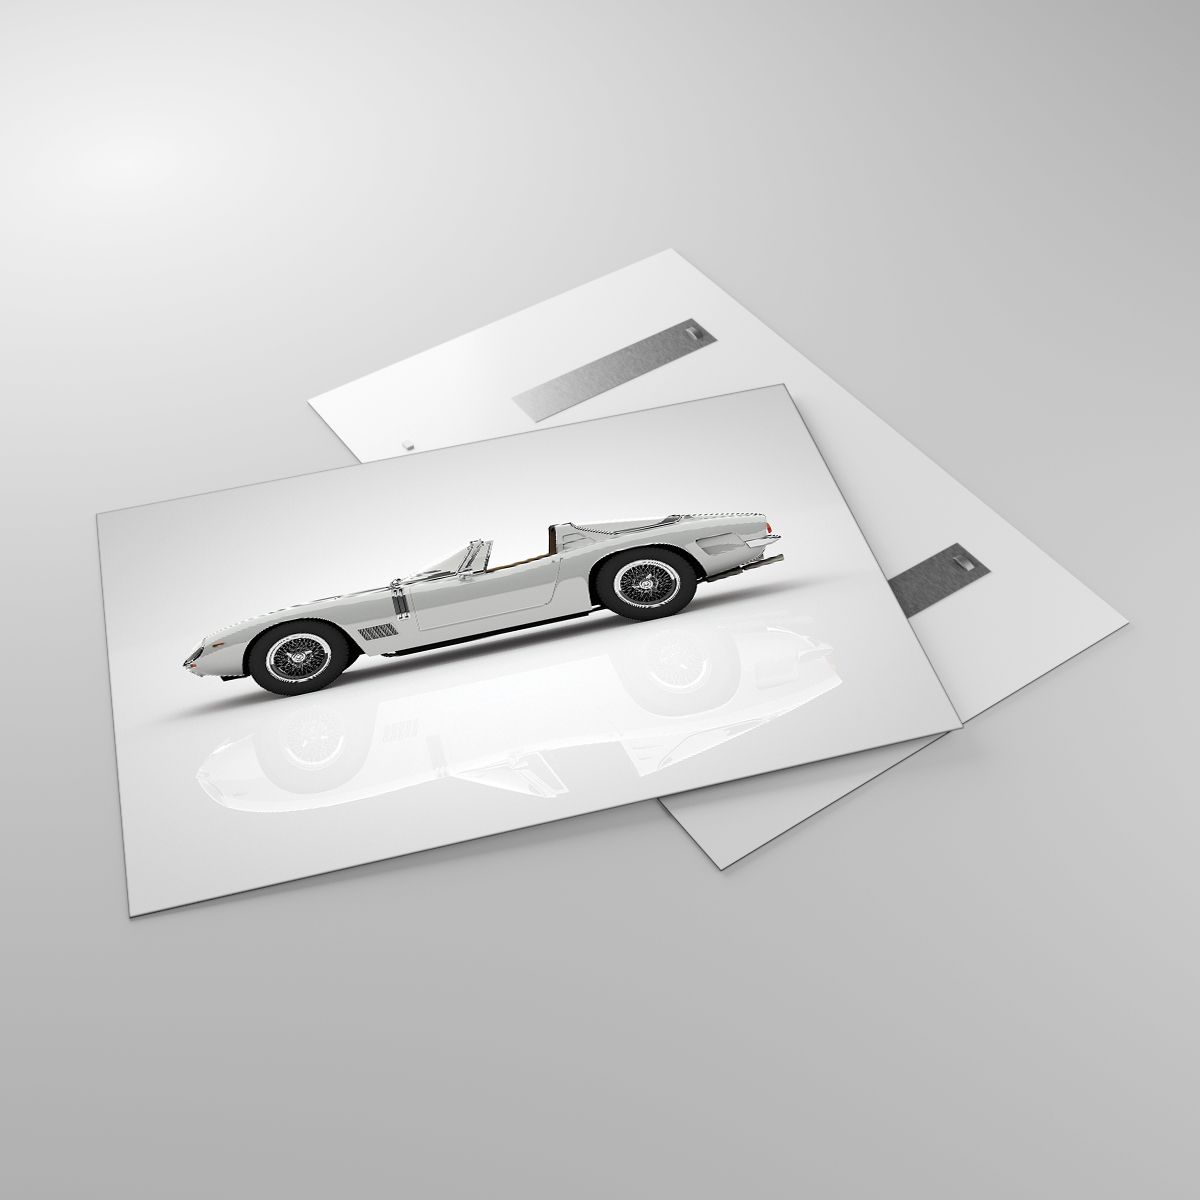 Obrazy Samochód Sportowy, Obrazy Kabriolet, Obrazy Motoryzacja, Obrazy Podróż, Obrazy Vintage